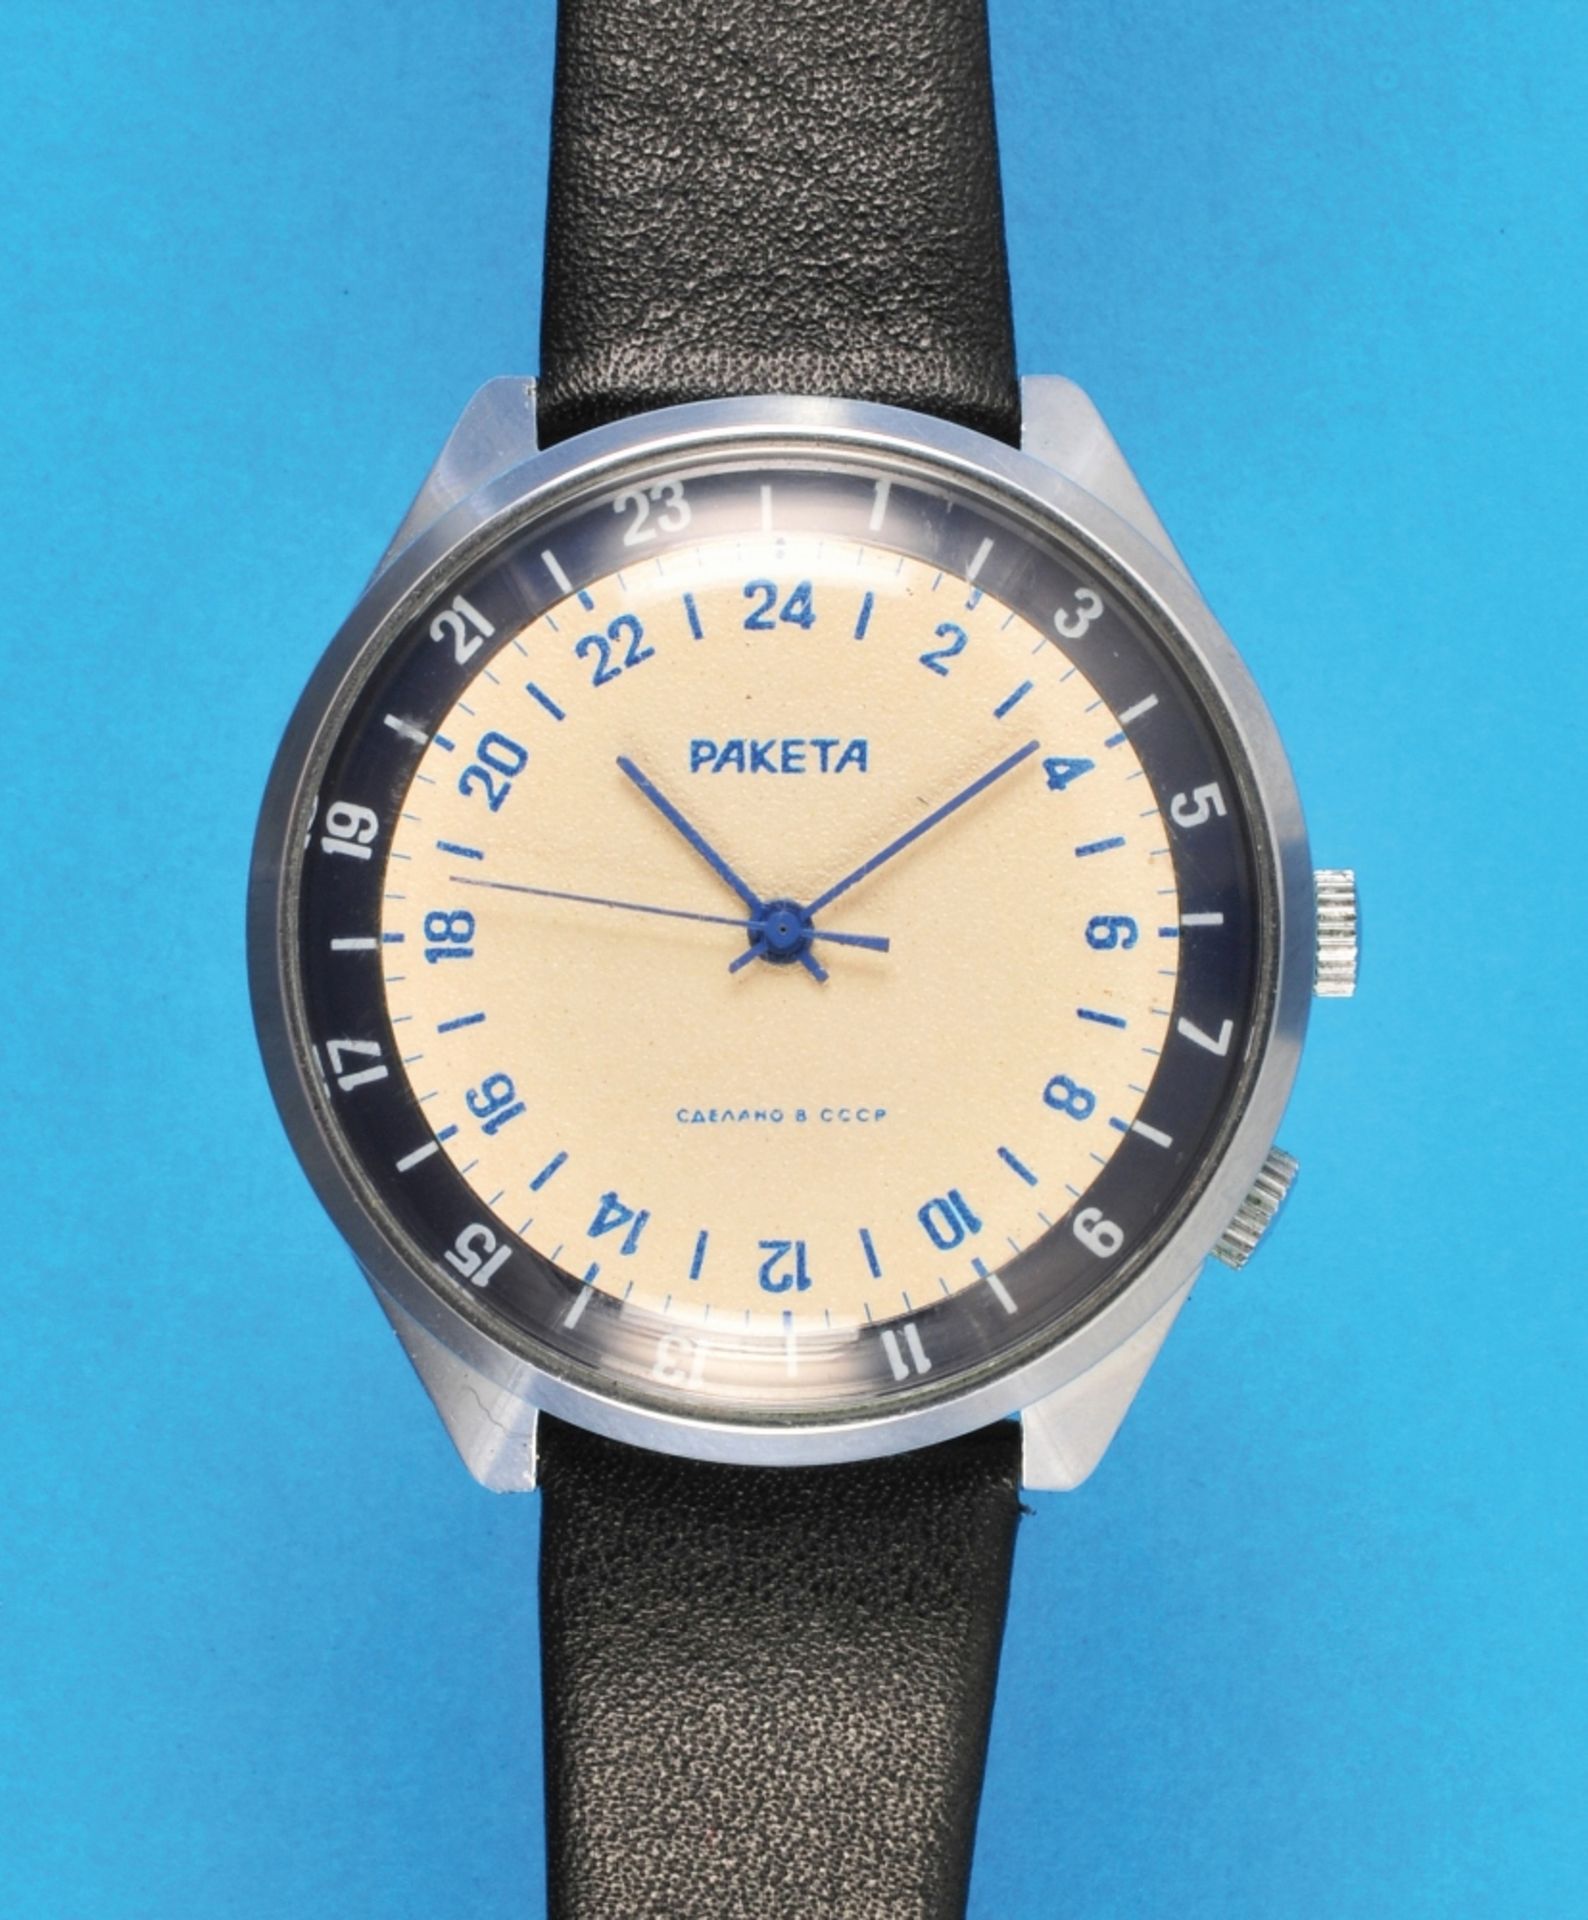 Raketa, Russian wristwatch with 24- hour dial